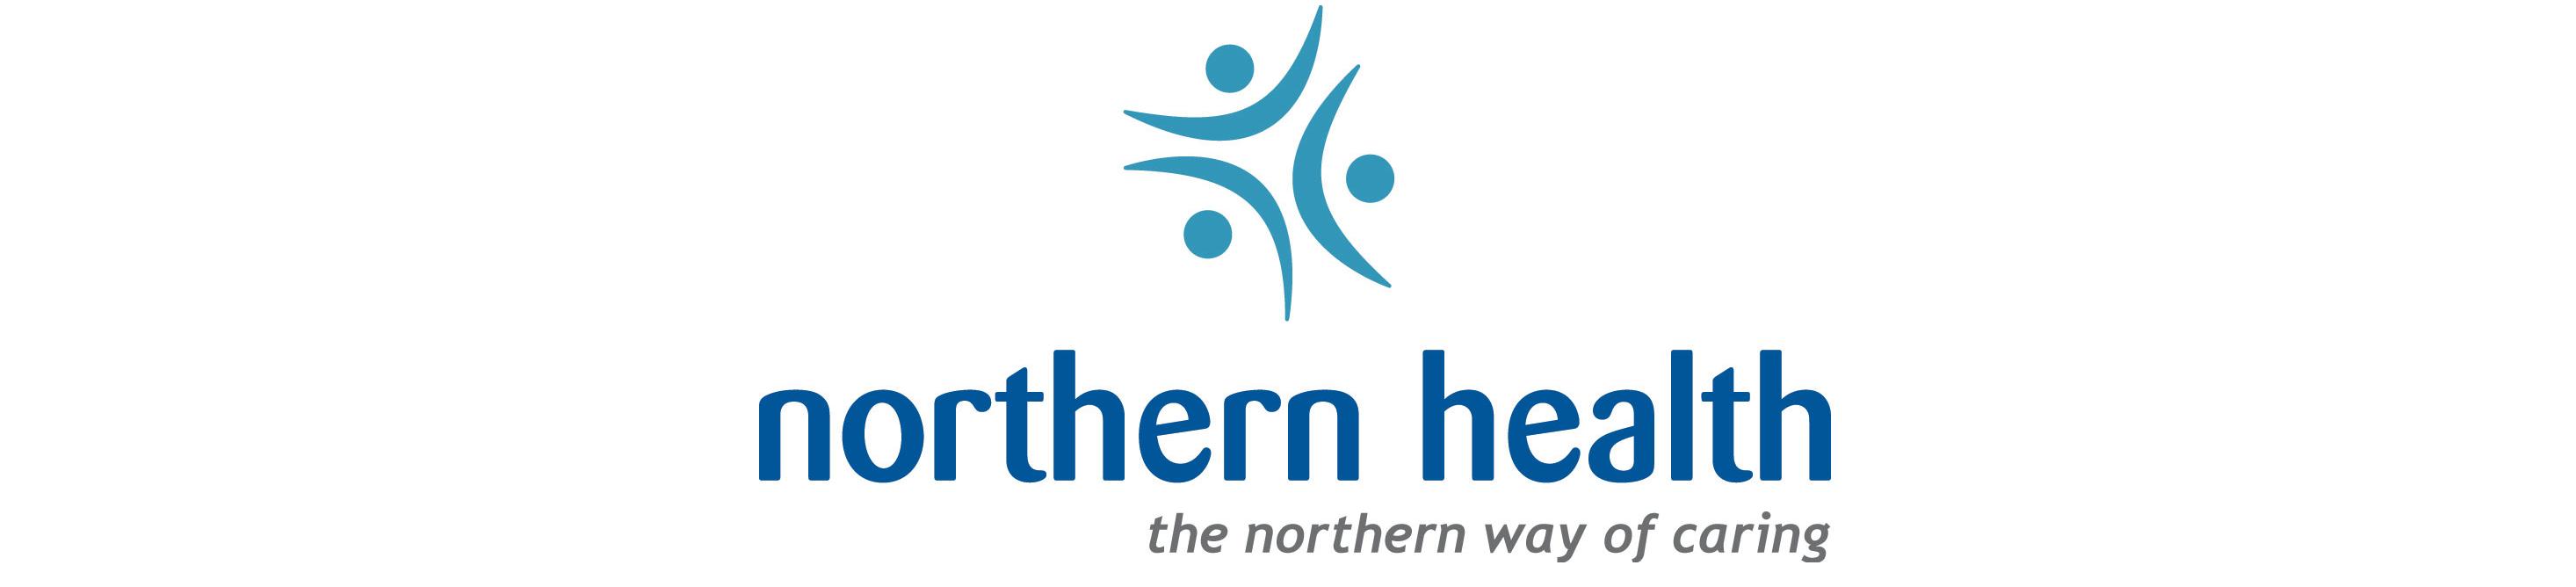 Northern-Health-logo